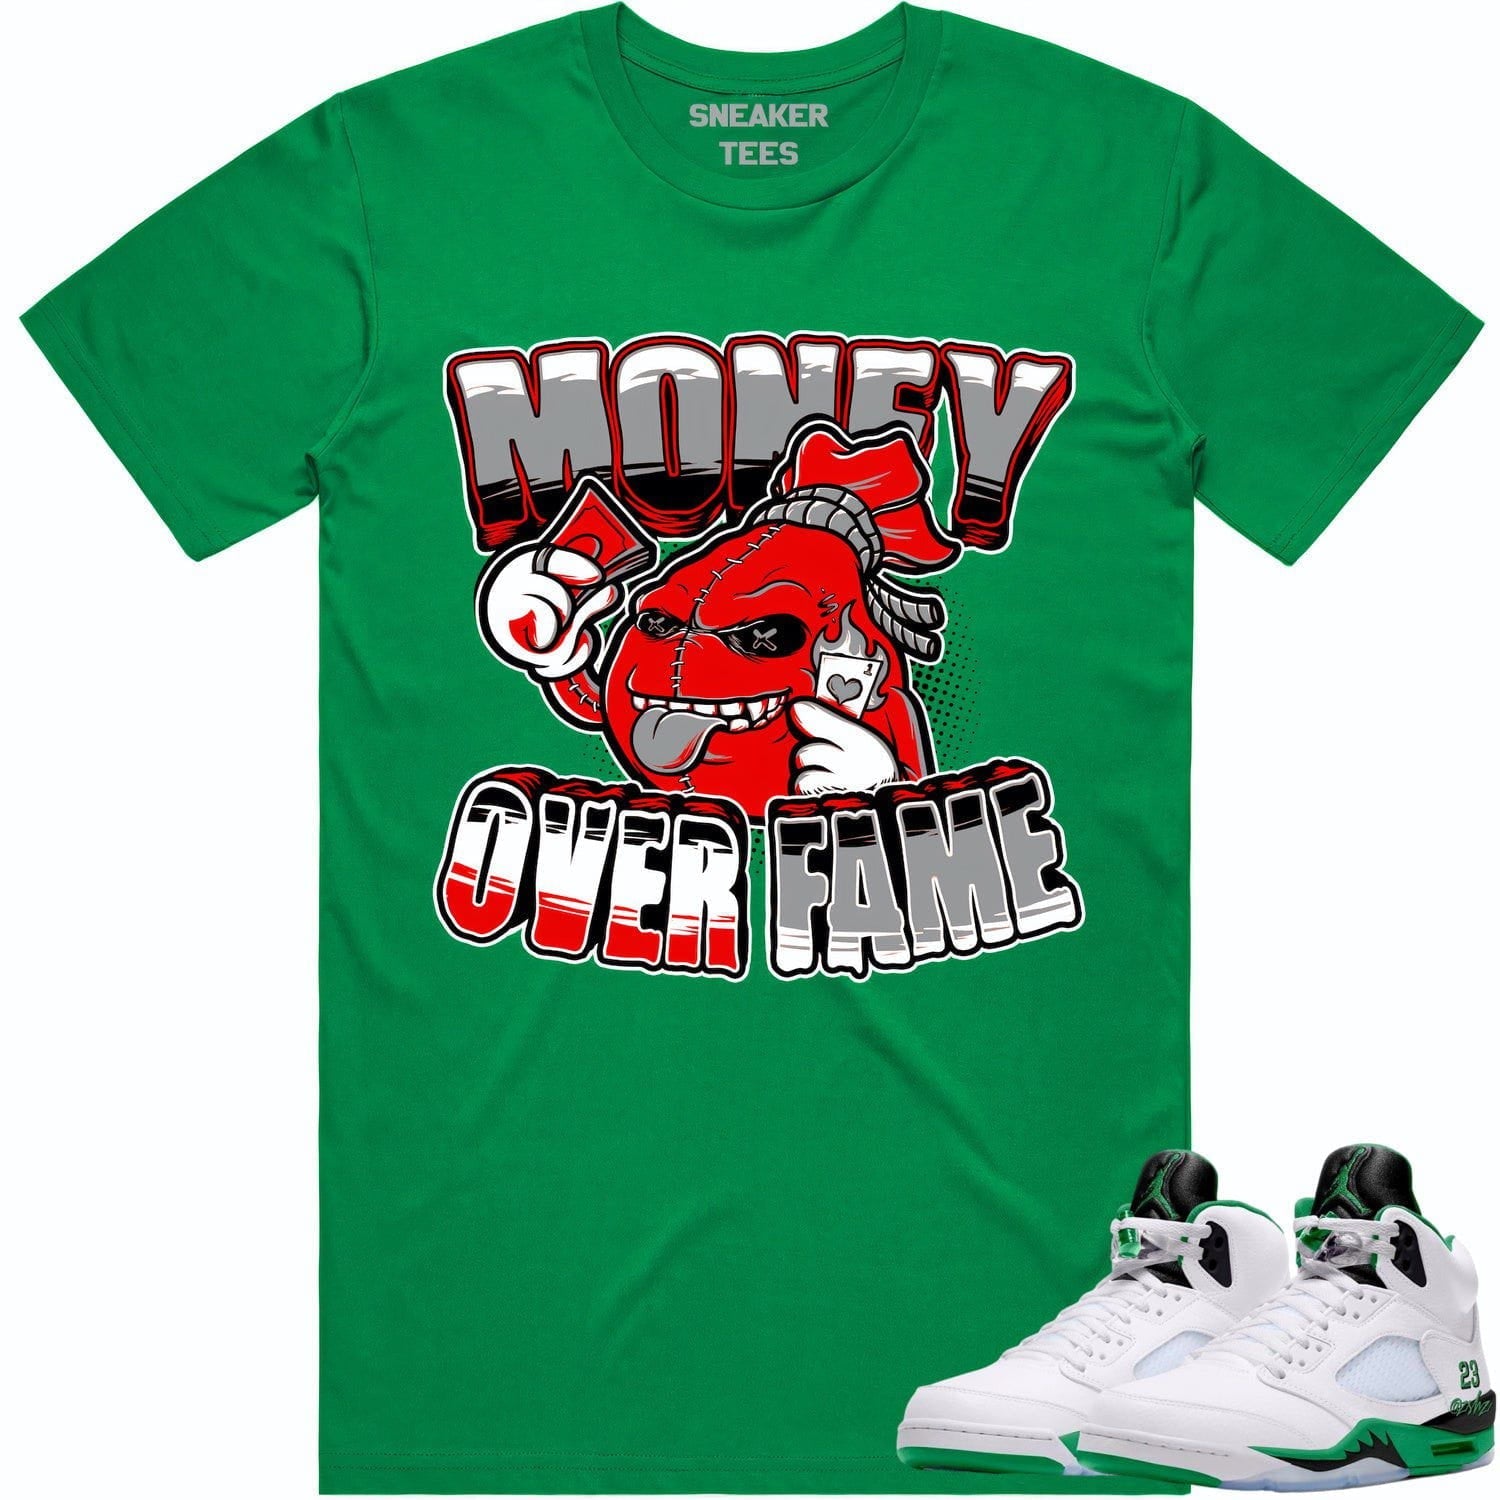 Penny 1 Stadium Green 1s Shirt - Sneaker Tees - Money over Fame